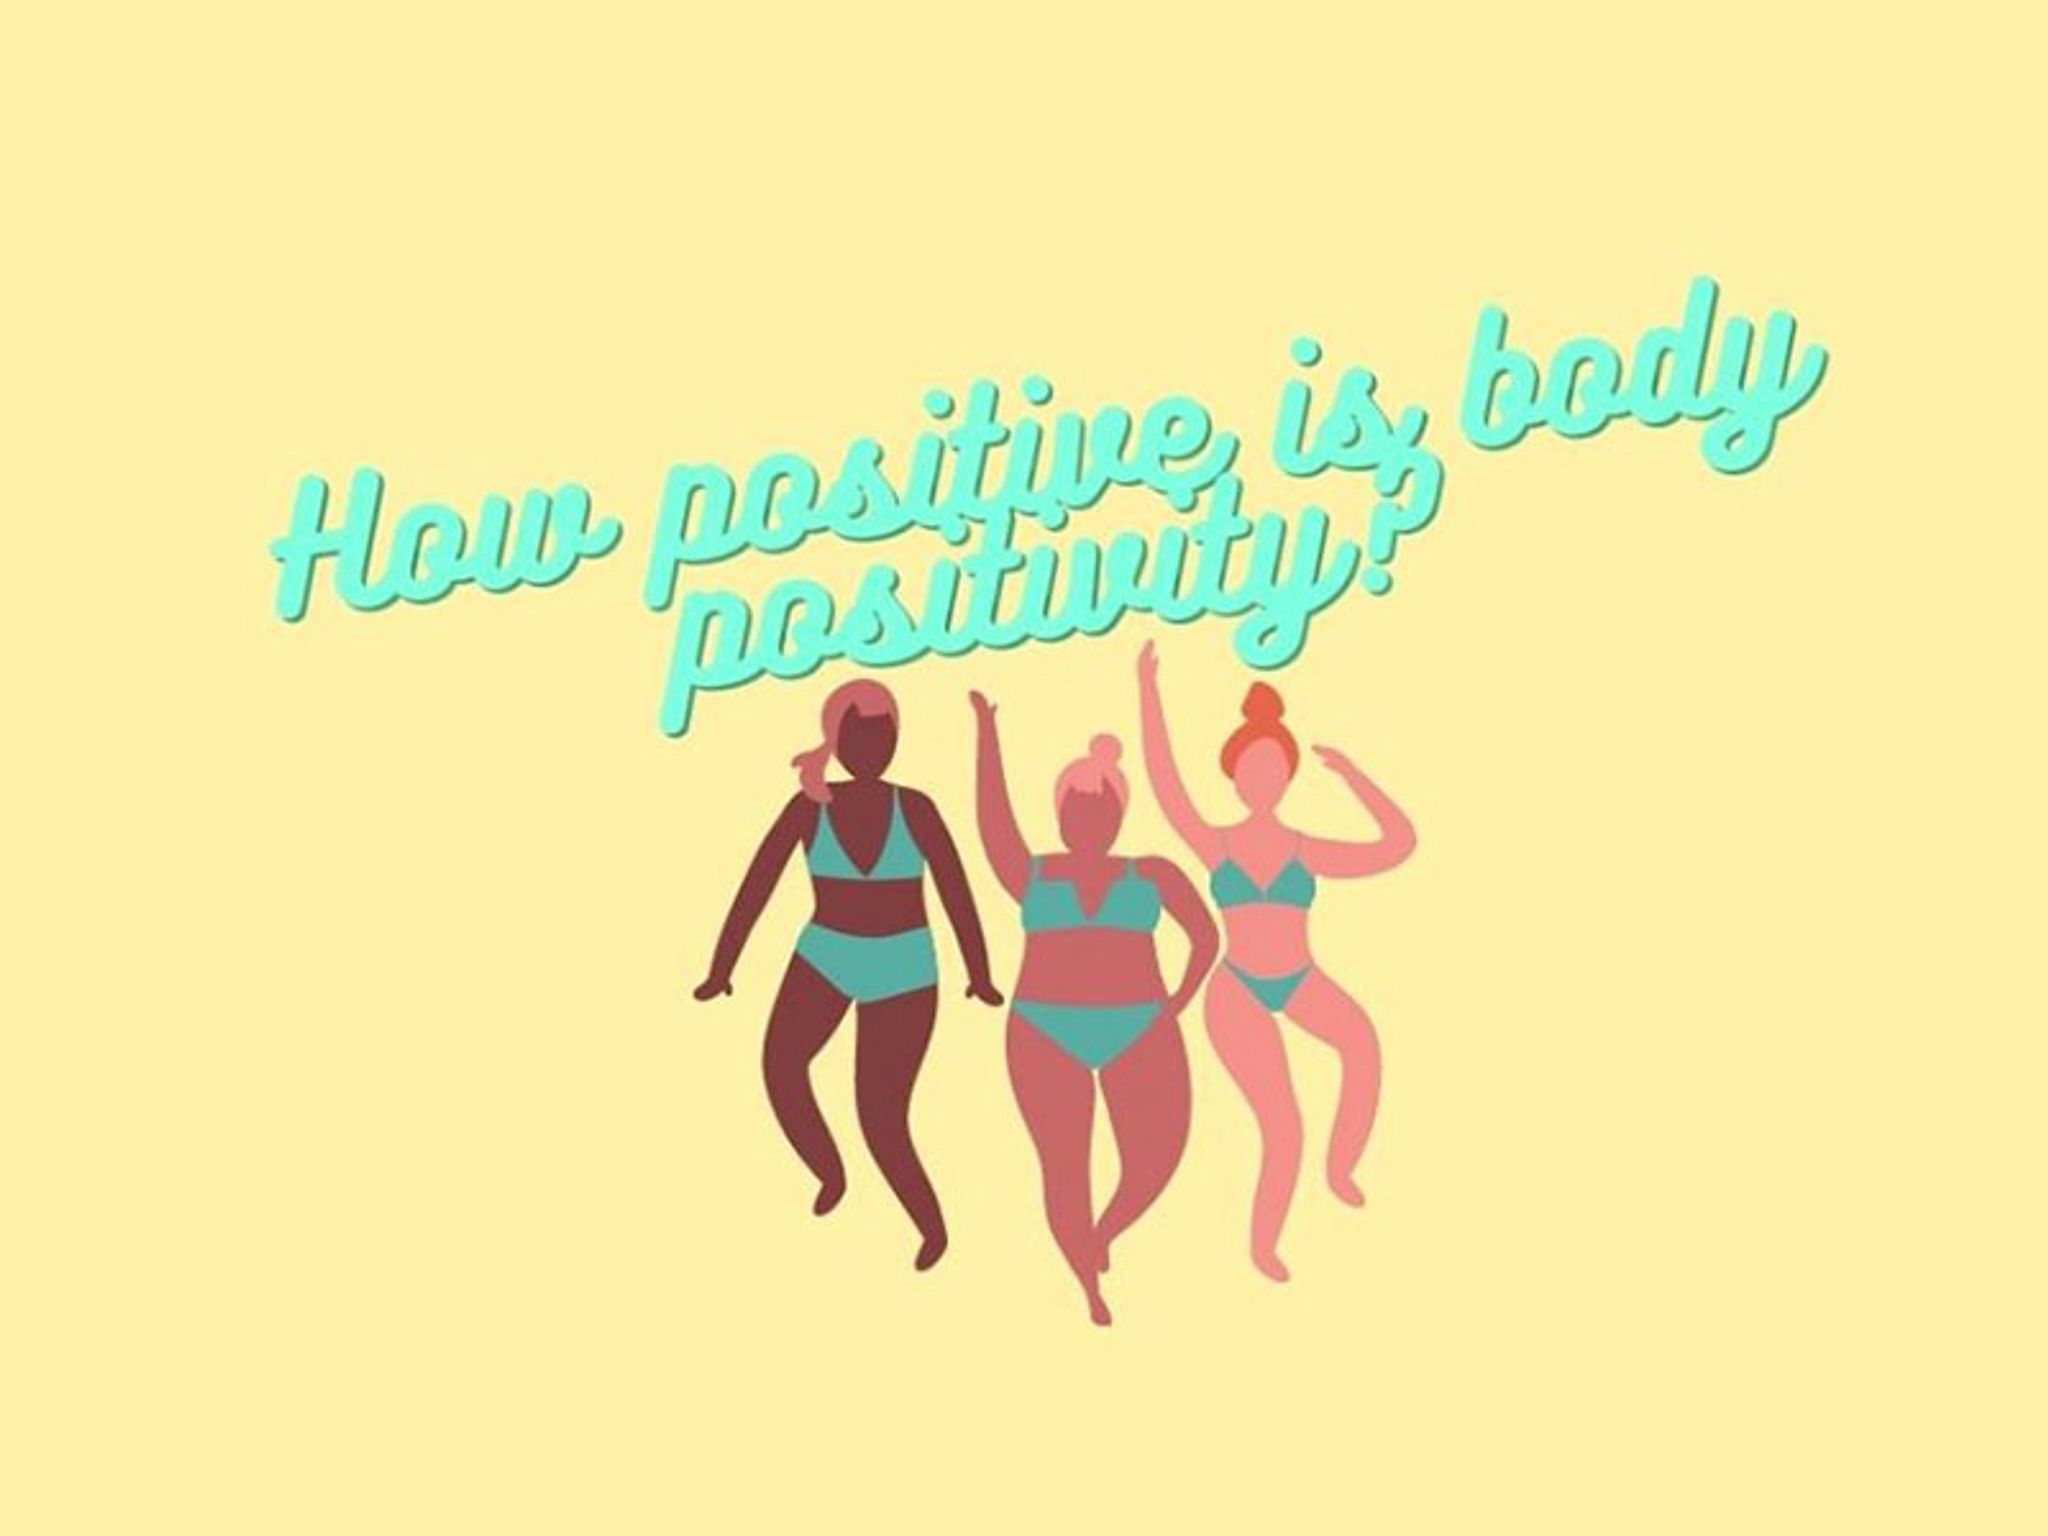 Plus-size celebrities Lizzo, Lena Dunham and Hunter McGrady support body positivity empowerment